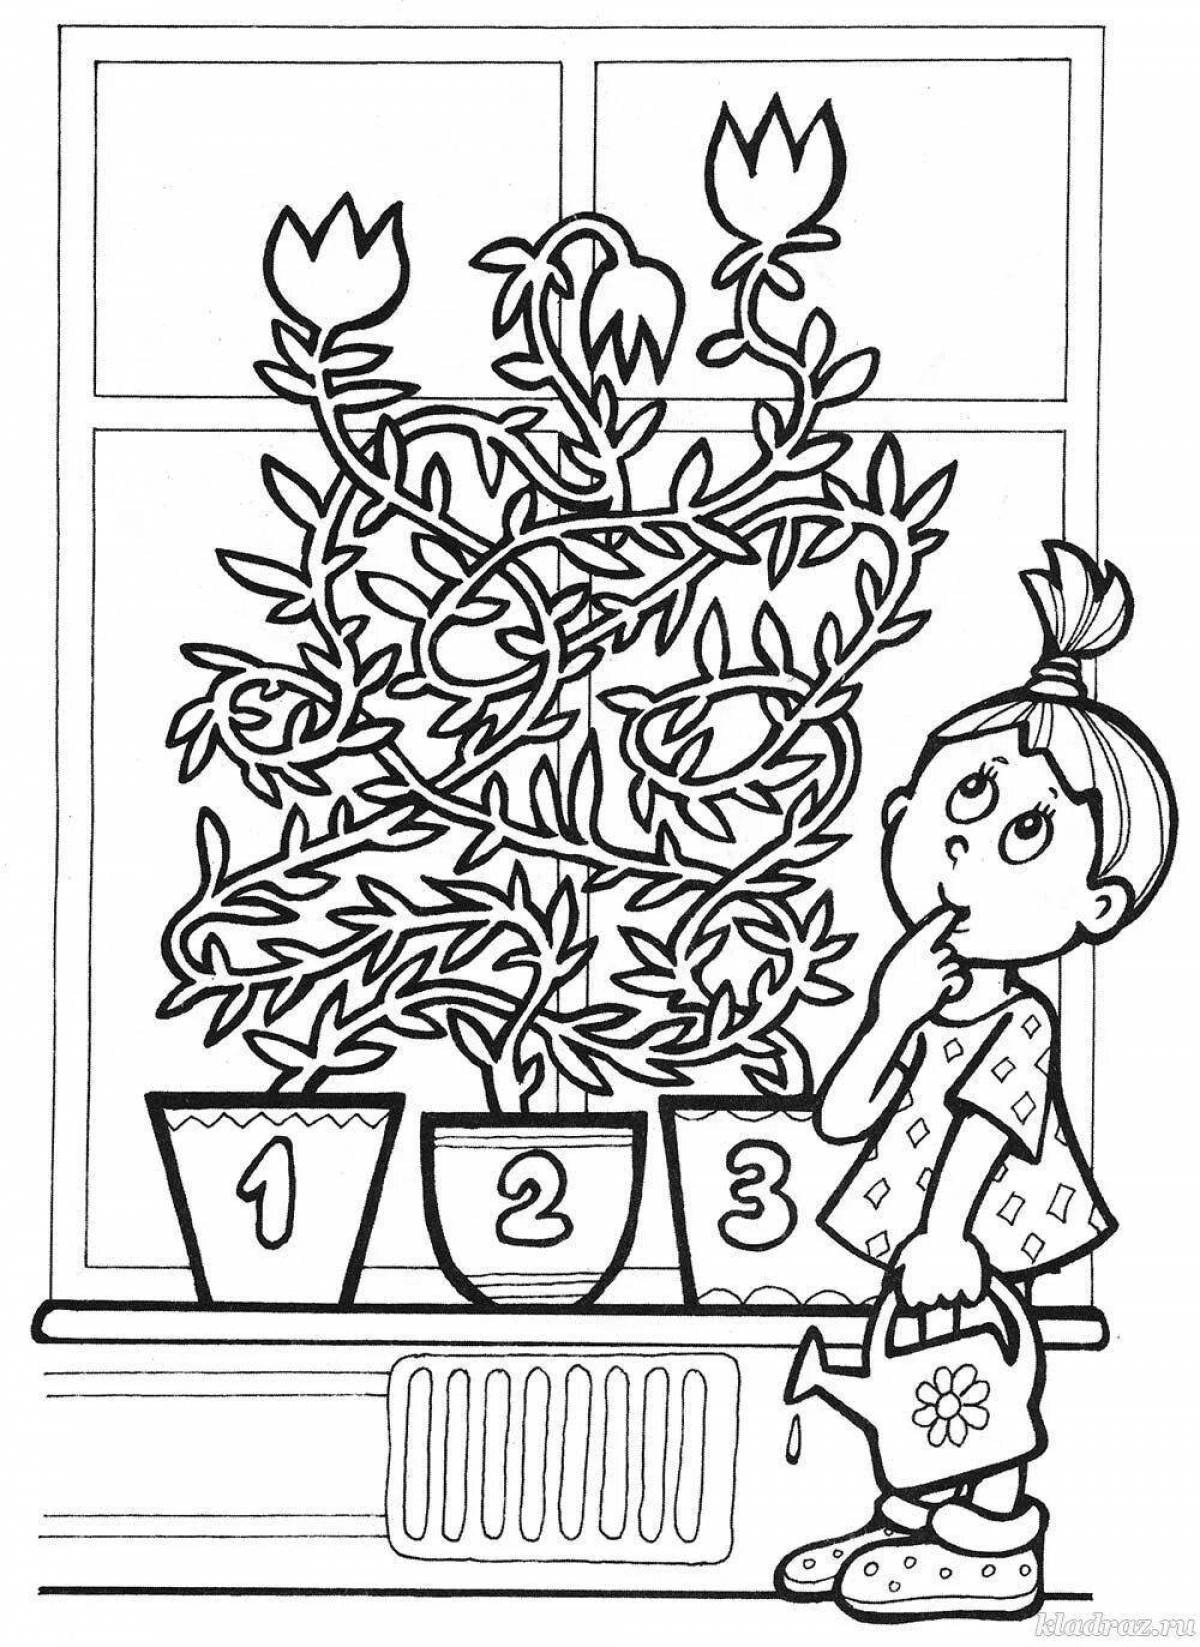 An interesting coloring book for indoor plants for preschoolers